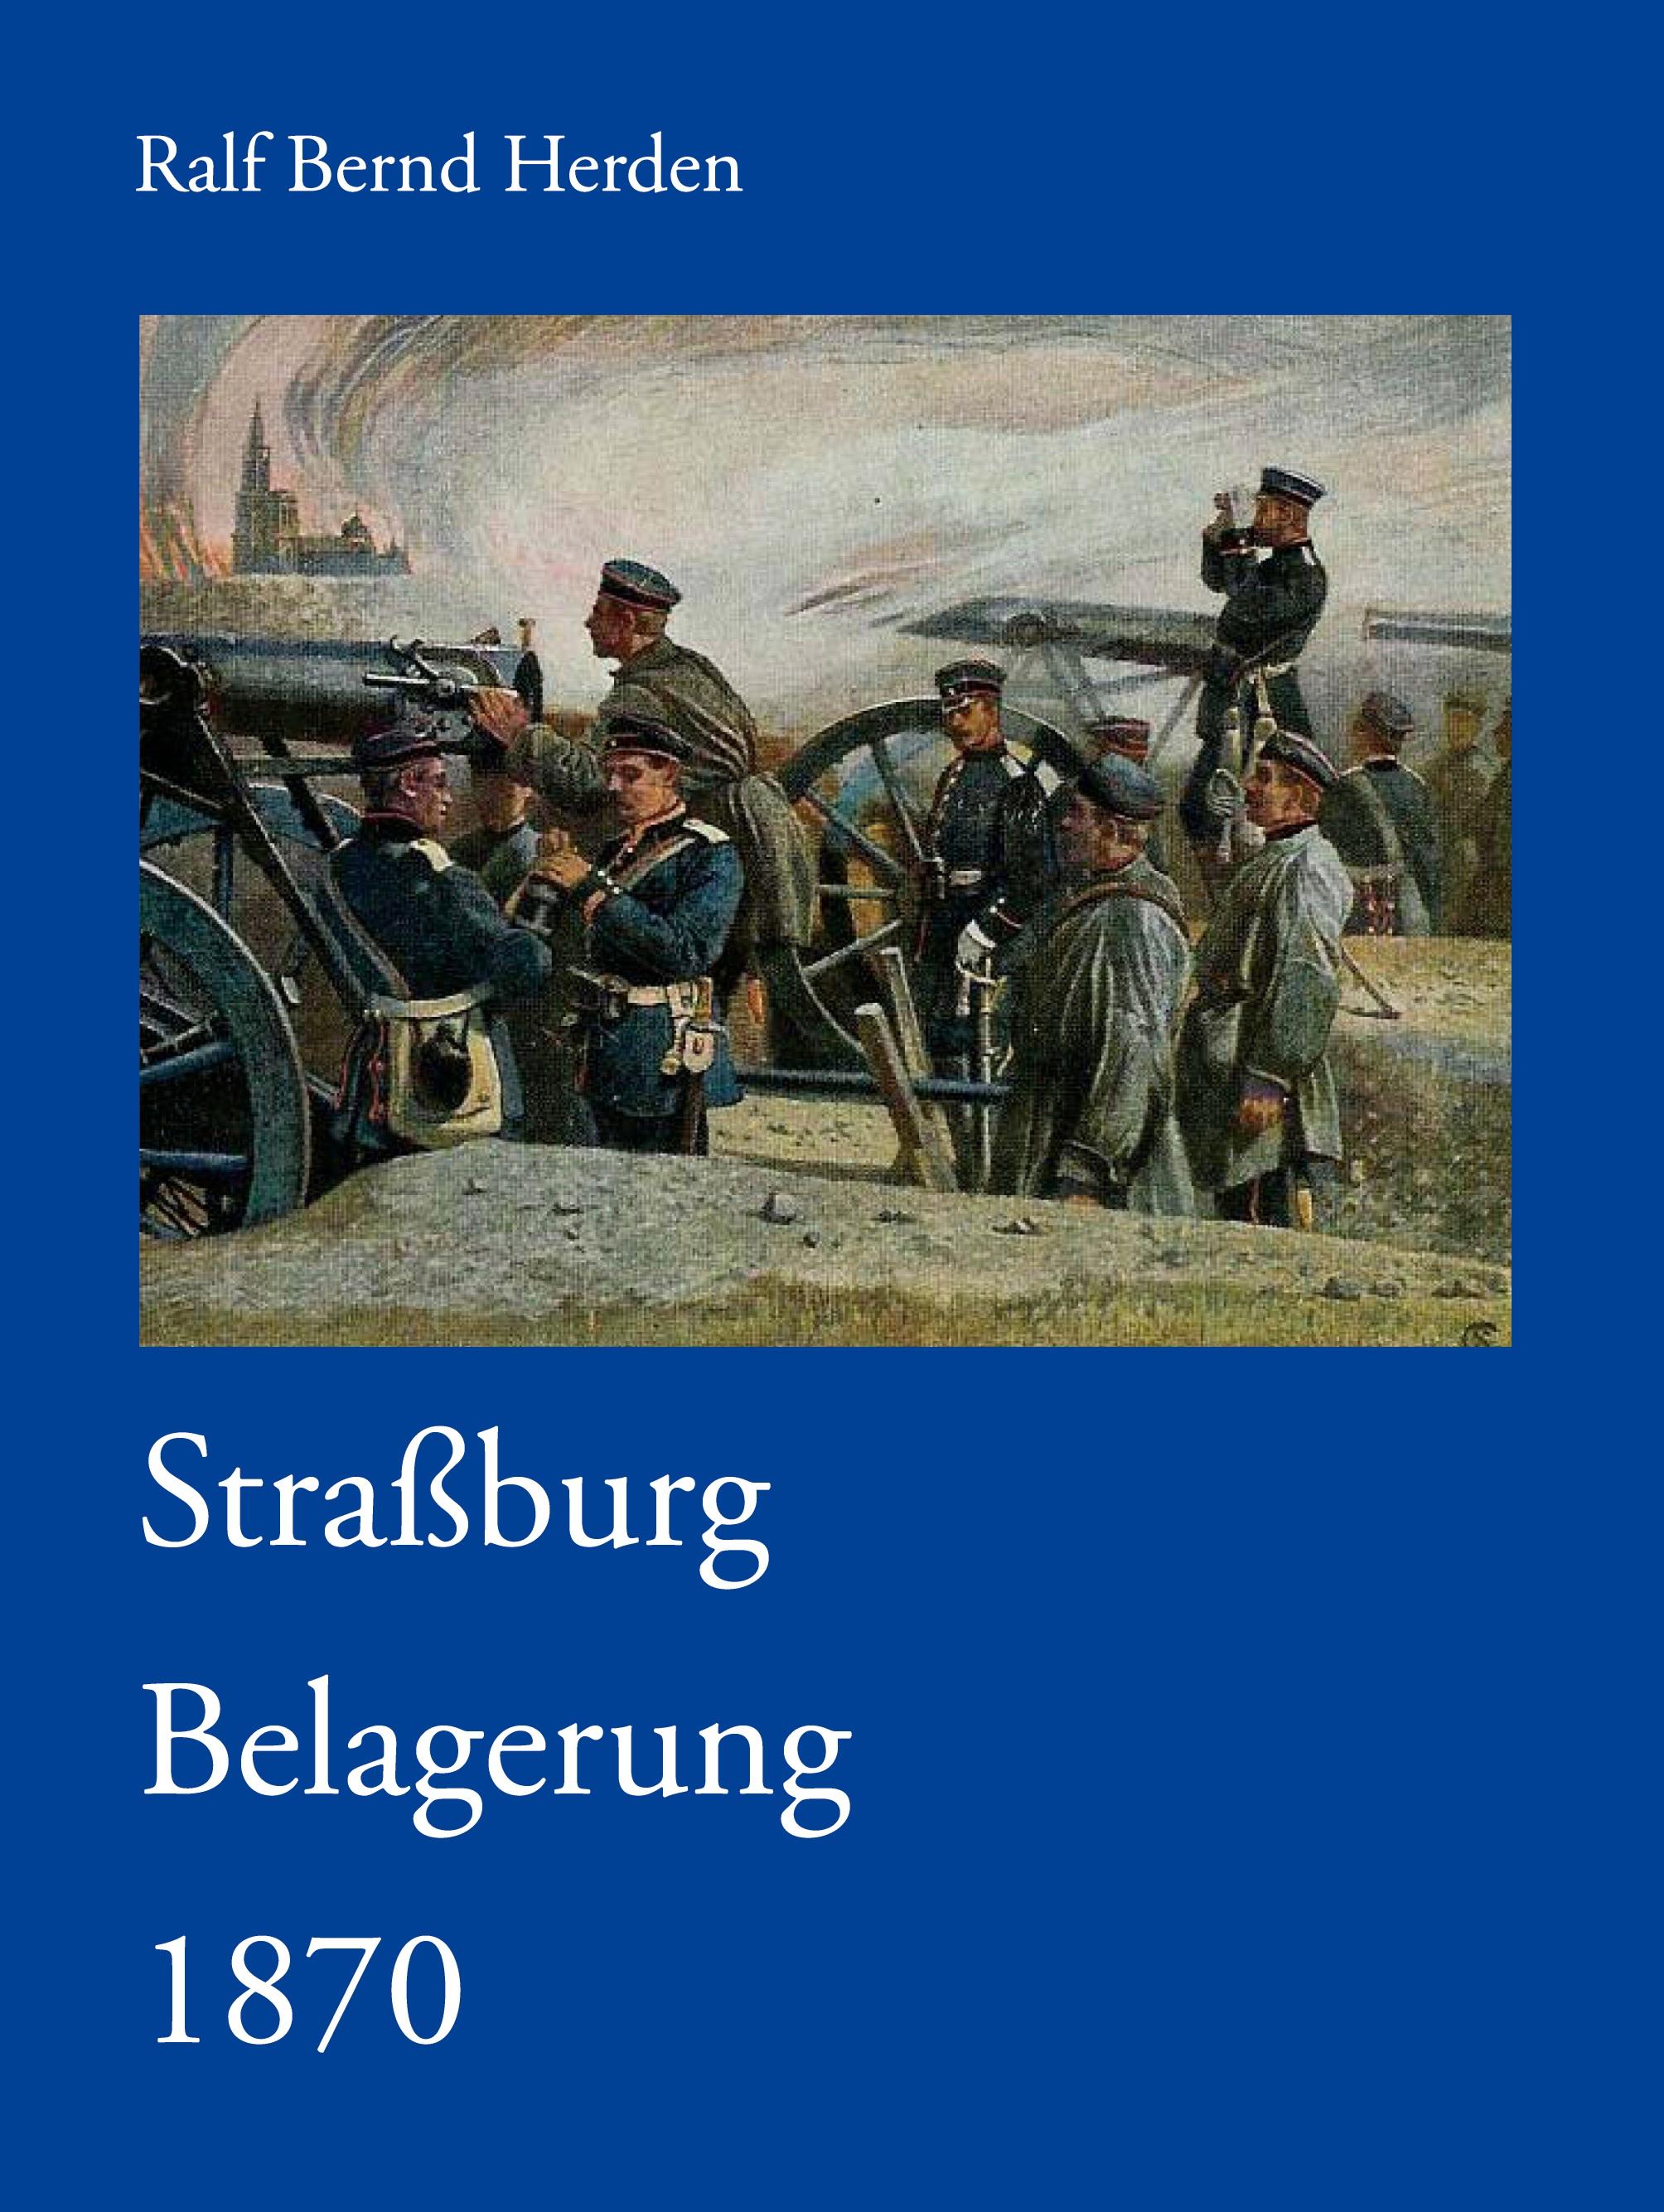 Strassburg Belagerung 1870 - Herden, Ralf B.